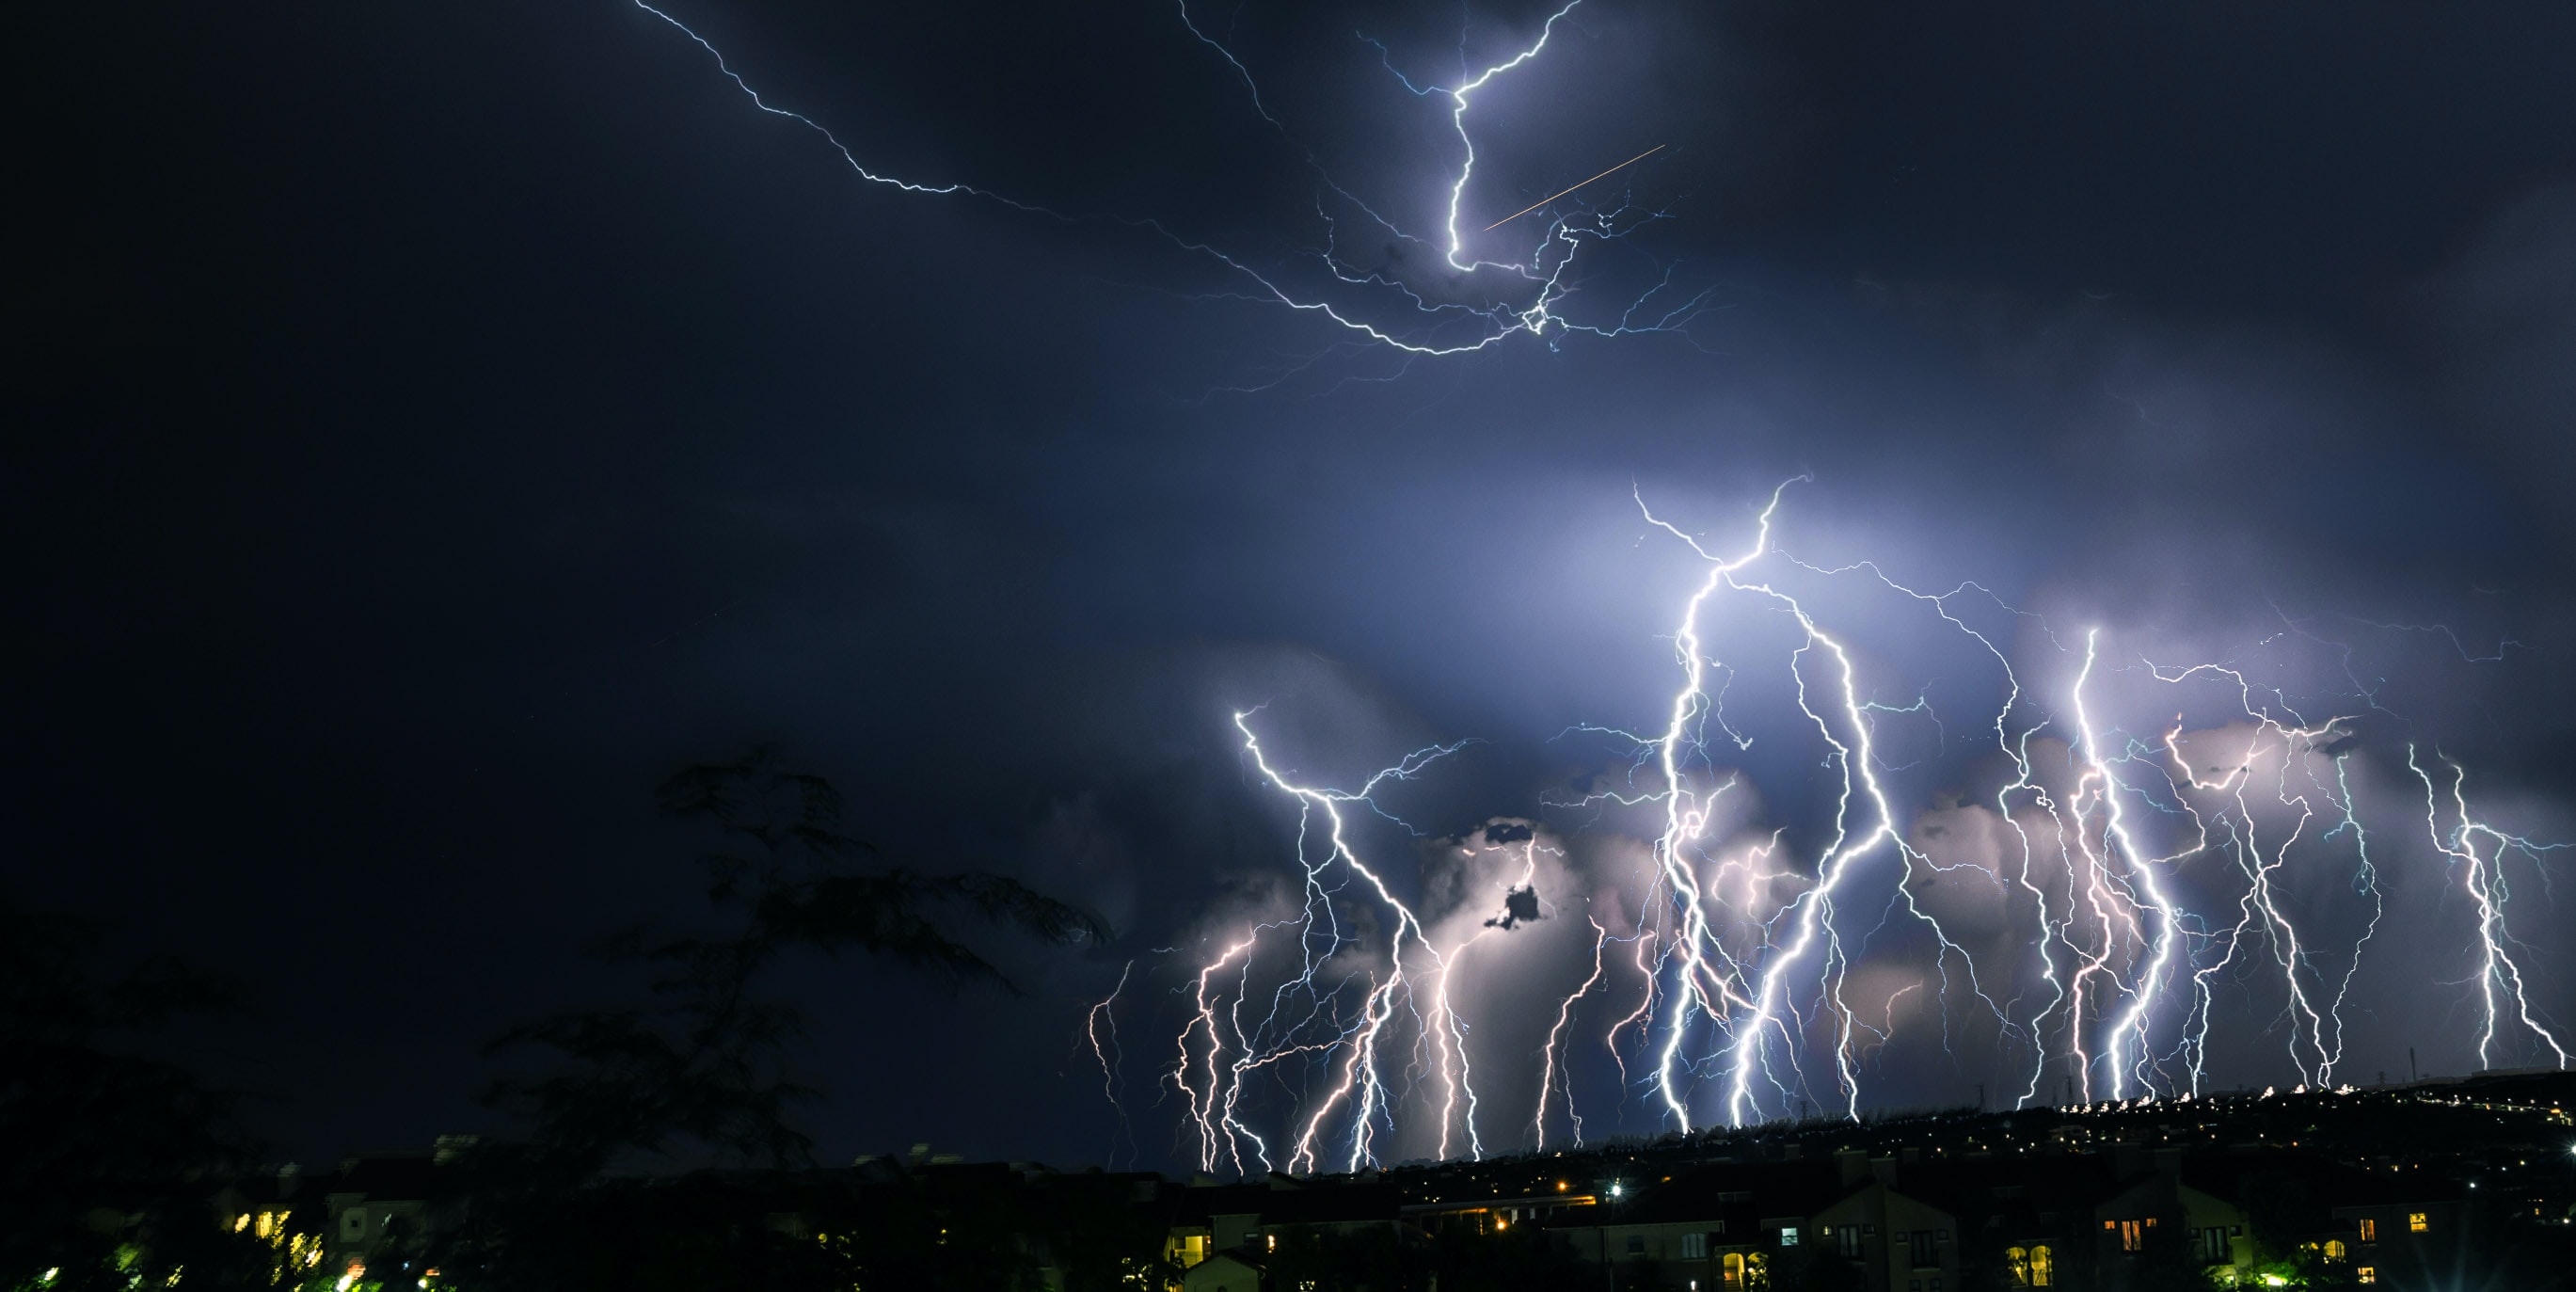 Massive lightning strikes over city; image by Clinton Naik, via Unsplash.com